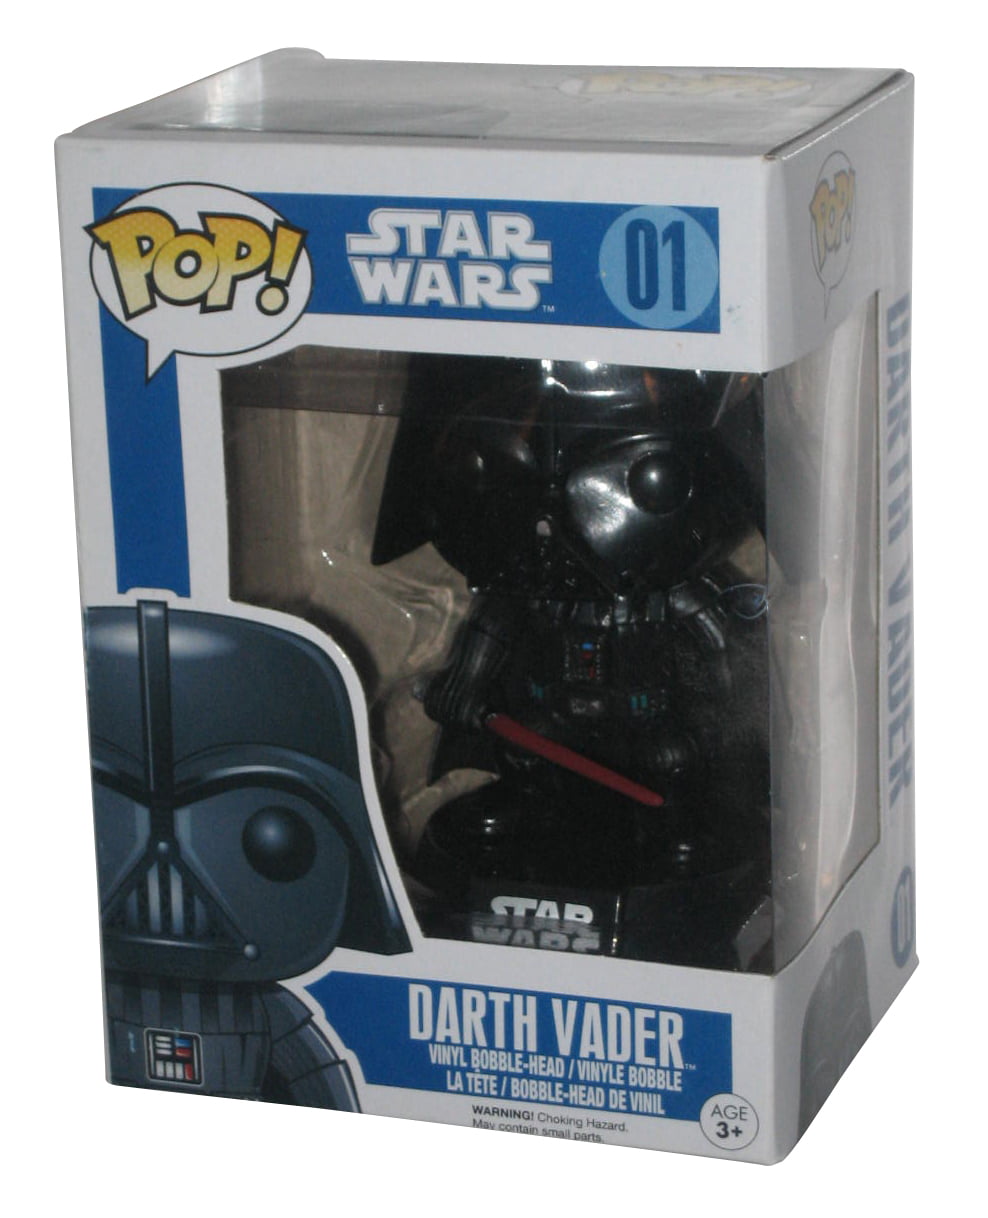 Darth Vader™ Vinyl Figure #01 Funko Pop Series 1 Star Wars™ 